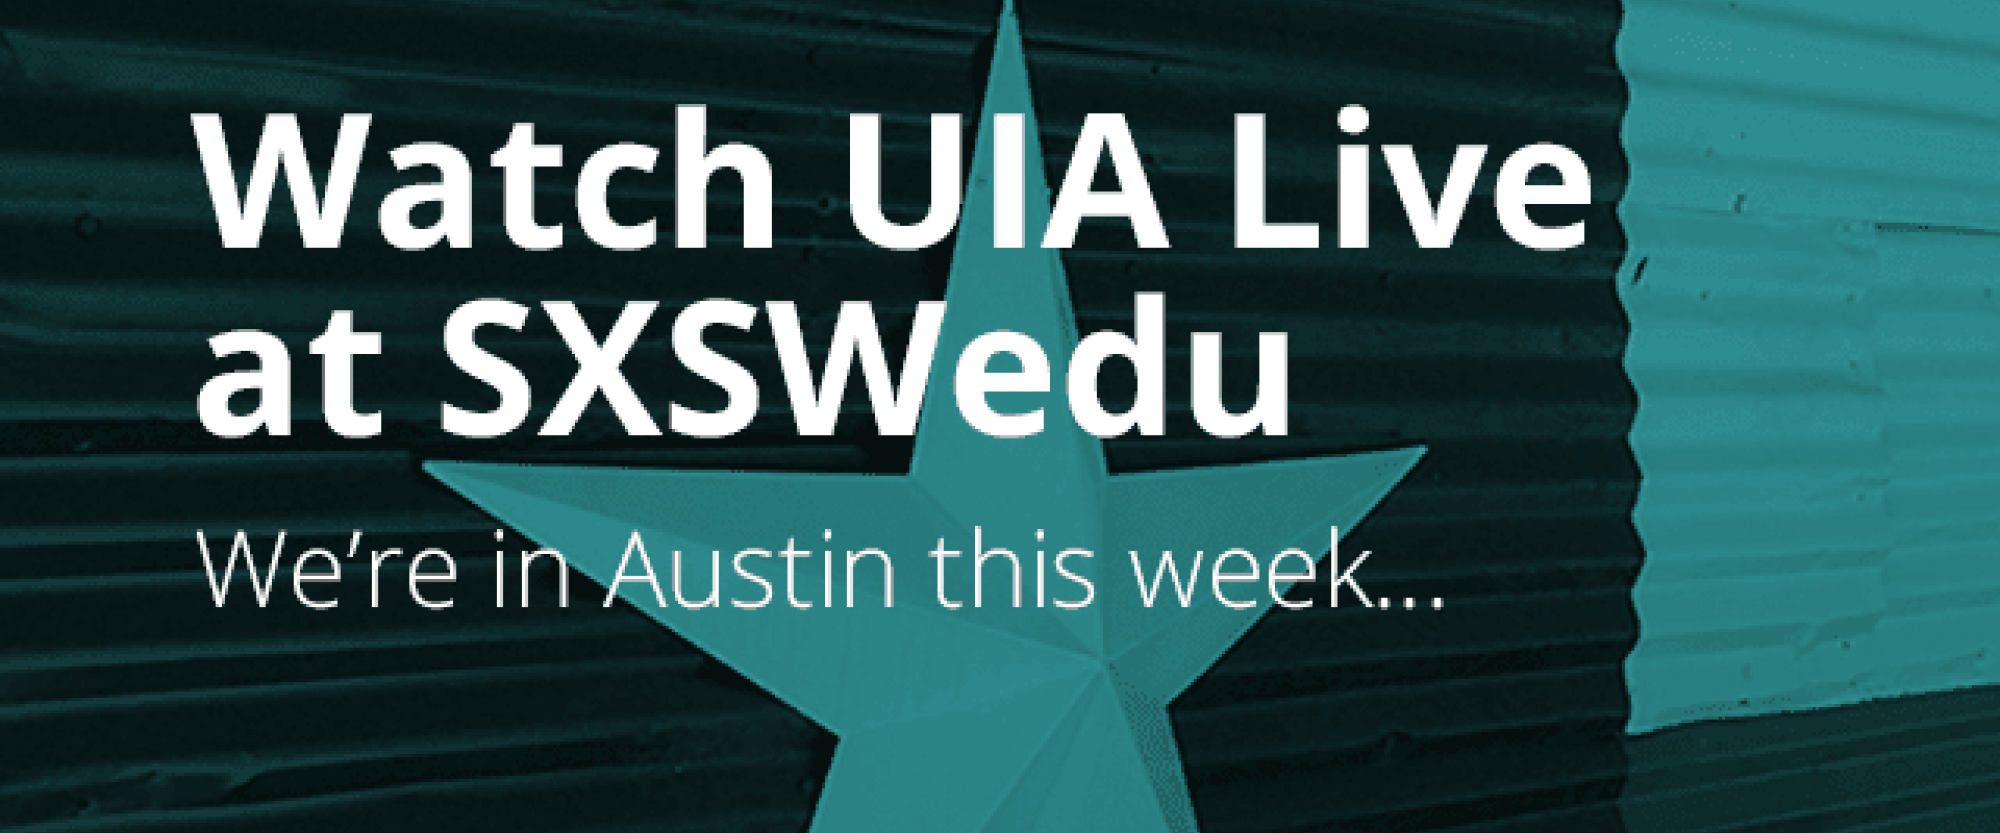 Live Periscope: UIA Broadcasting from SXSWedu in Austin, Texas